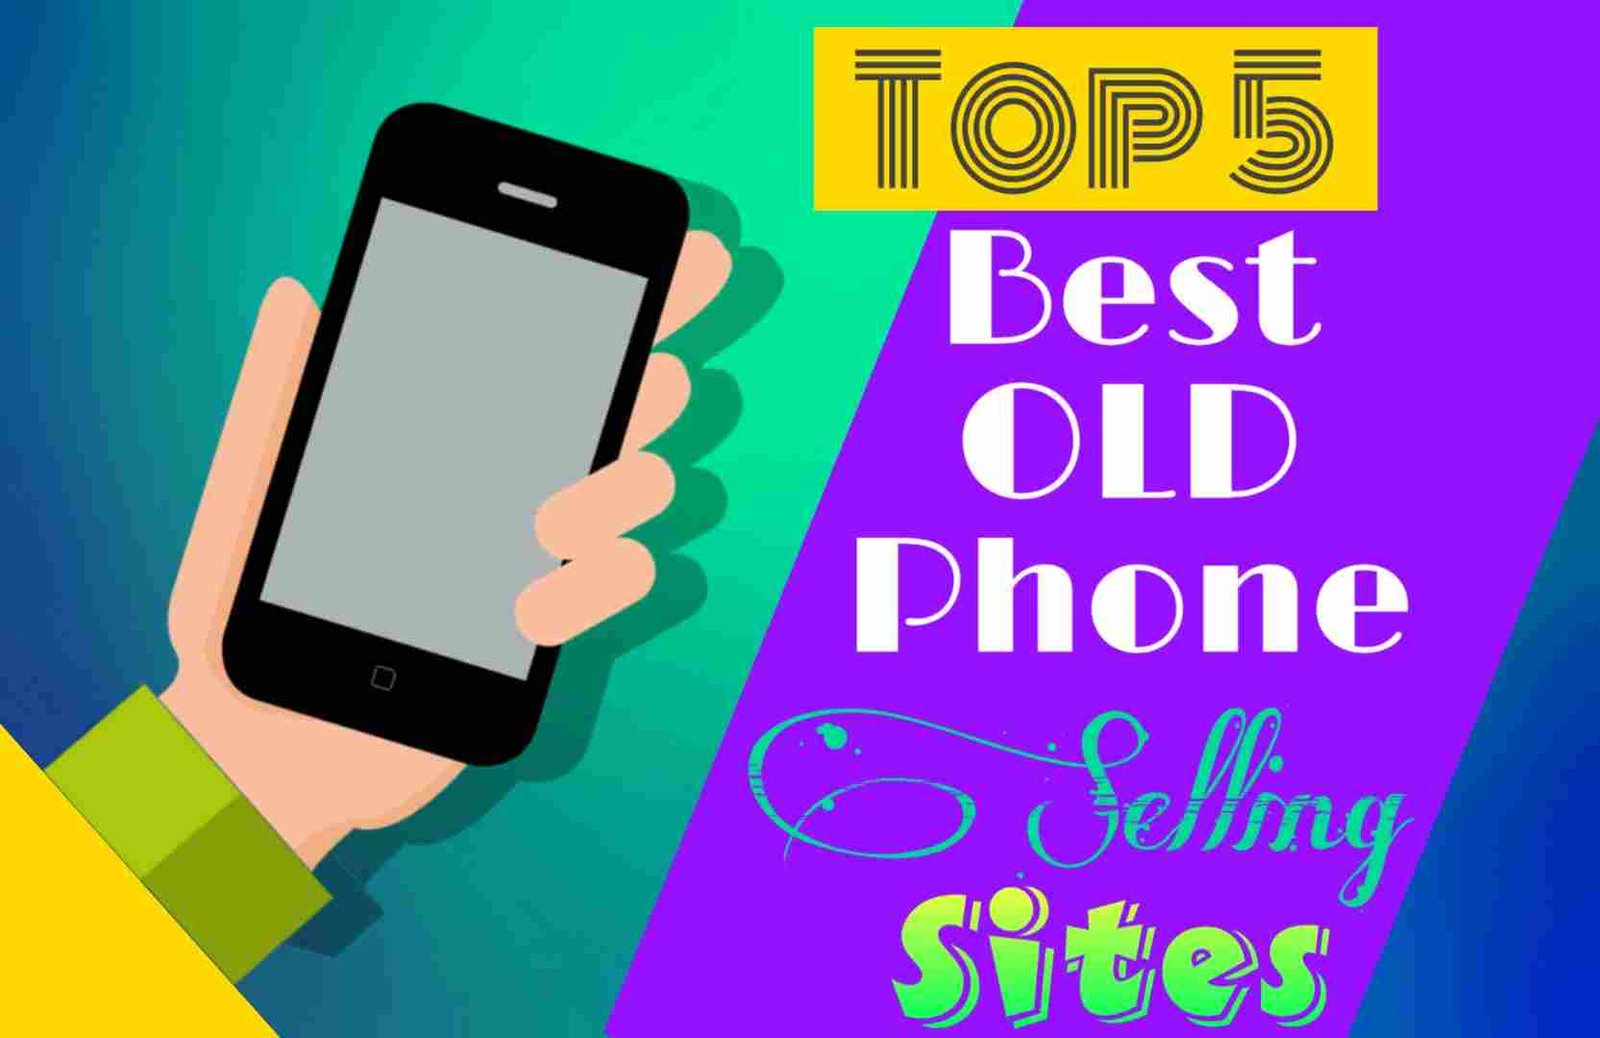 5 Best Old Phone Selling Websites